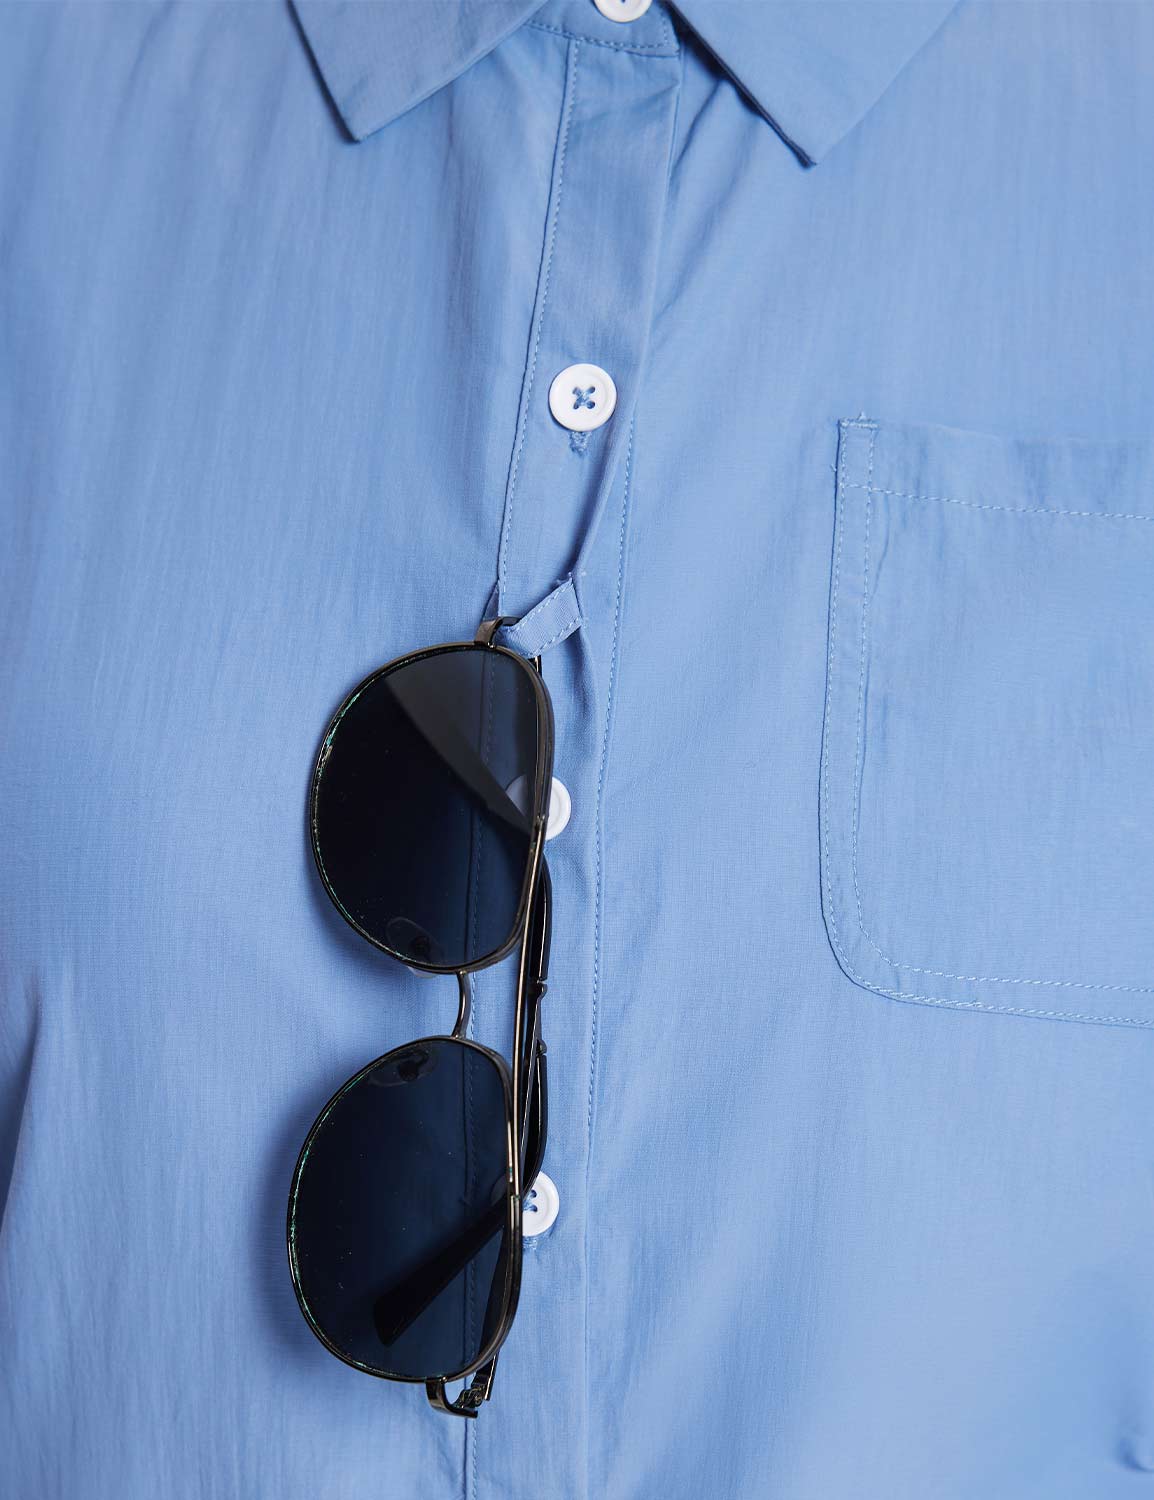 Baleaf Women's Quick-Dry UPF 50+ Sun Shirts Ashleigh Blue Details